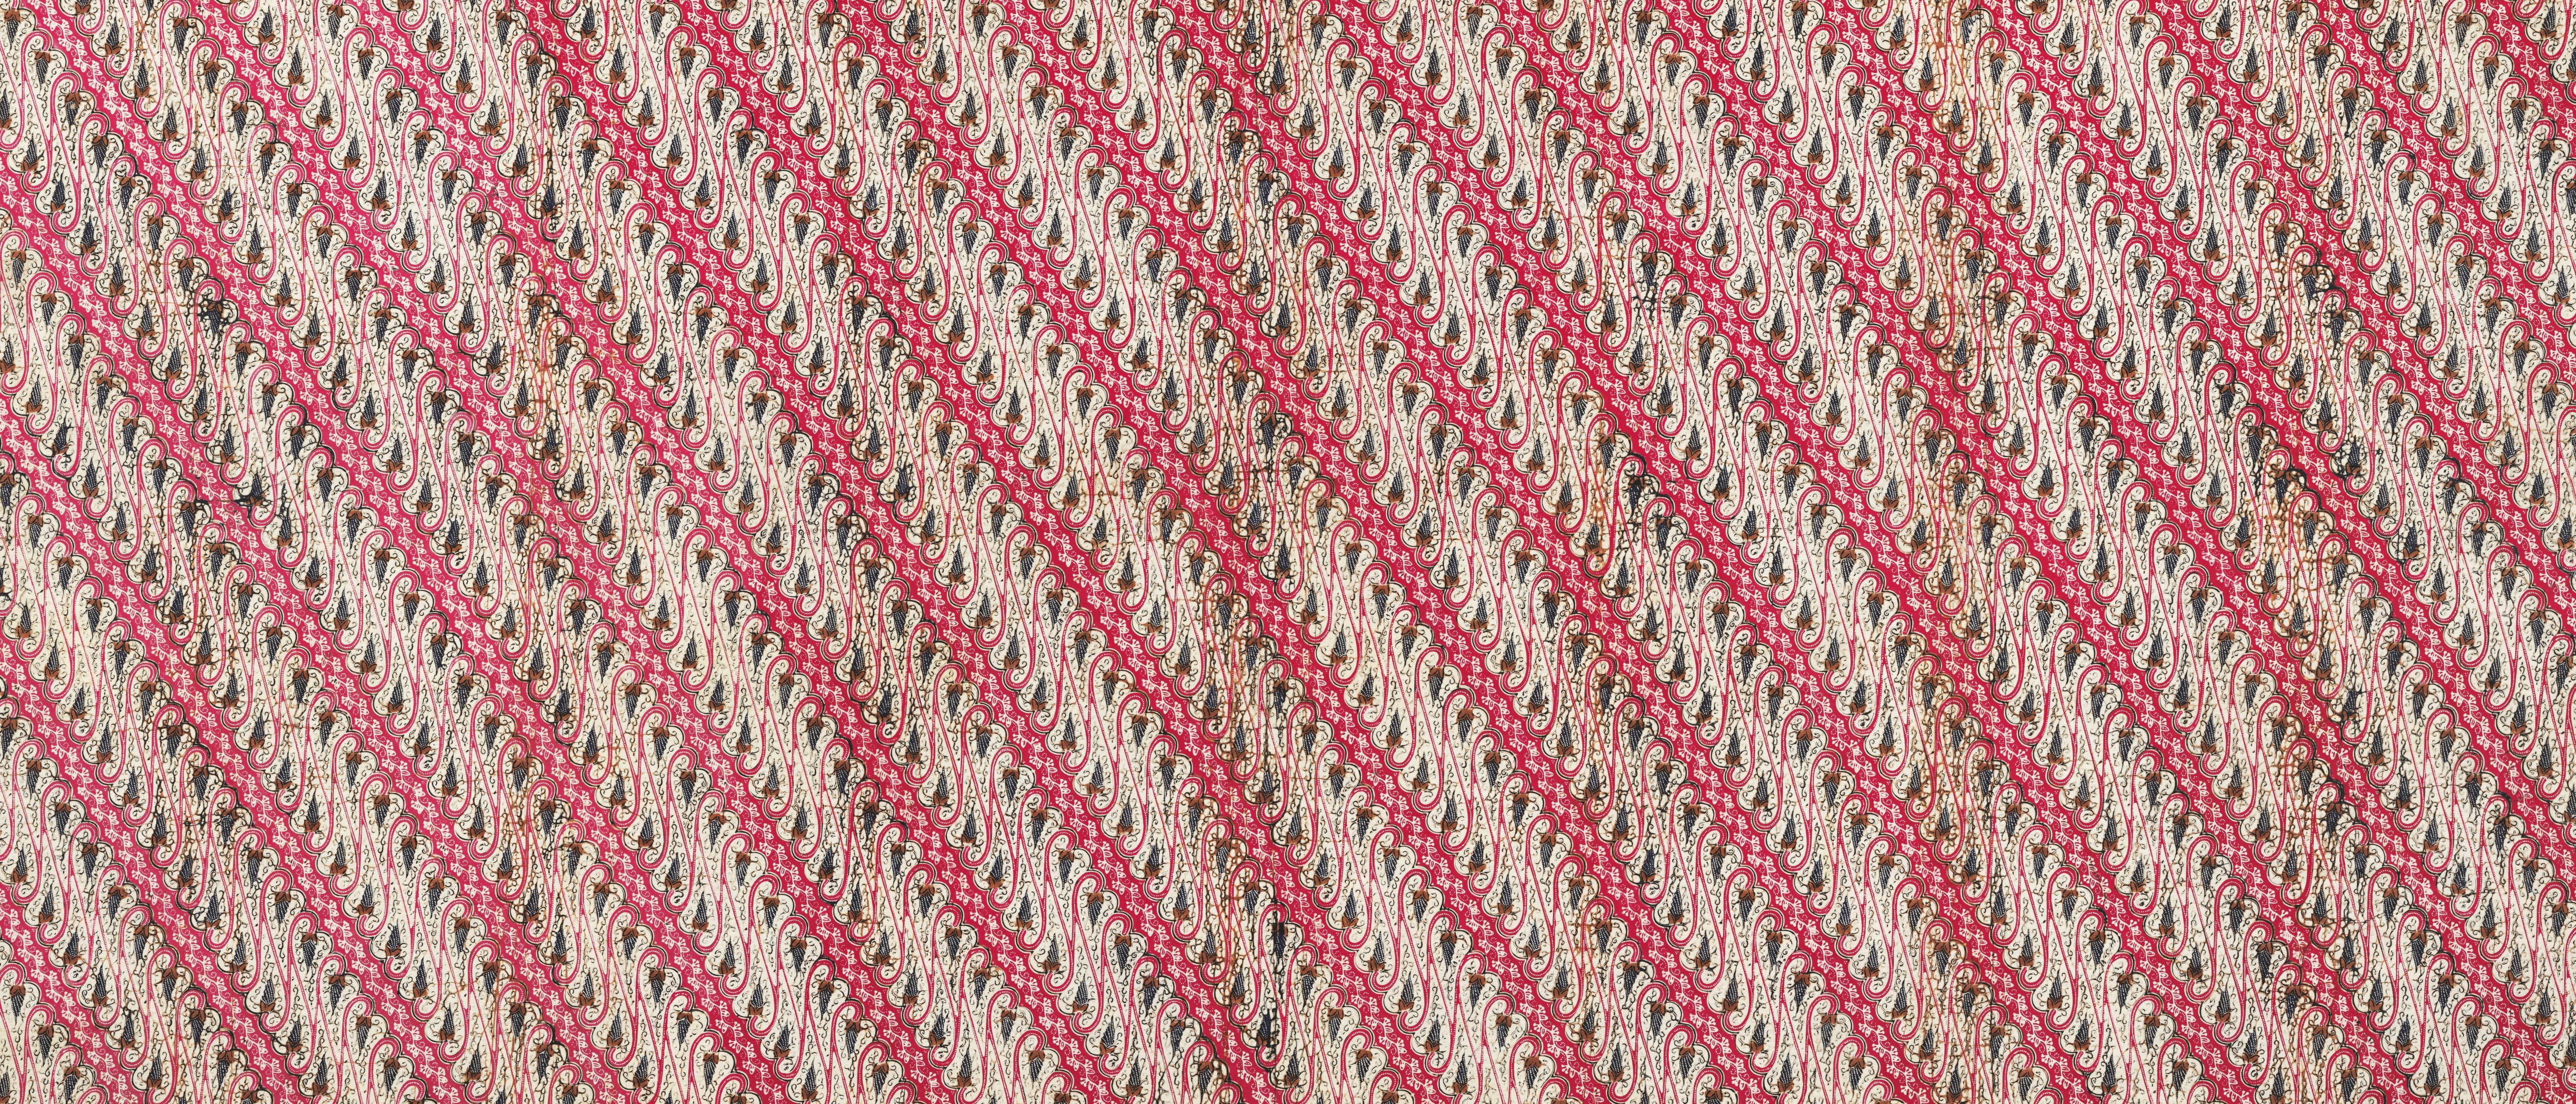 Ultra Wide Ultrawide Fabric Texture Pattern Symmetry 5852x2508